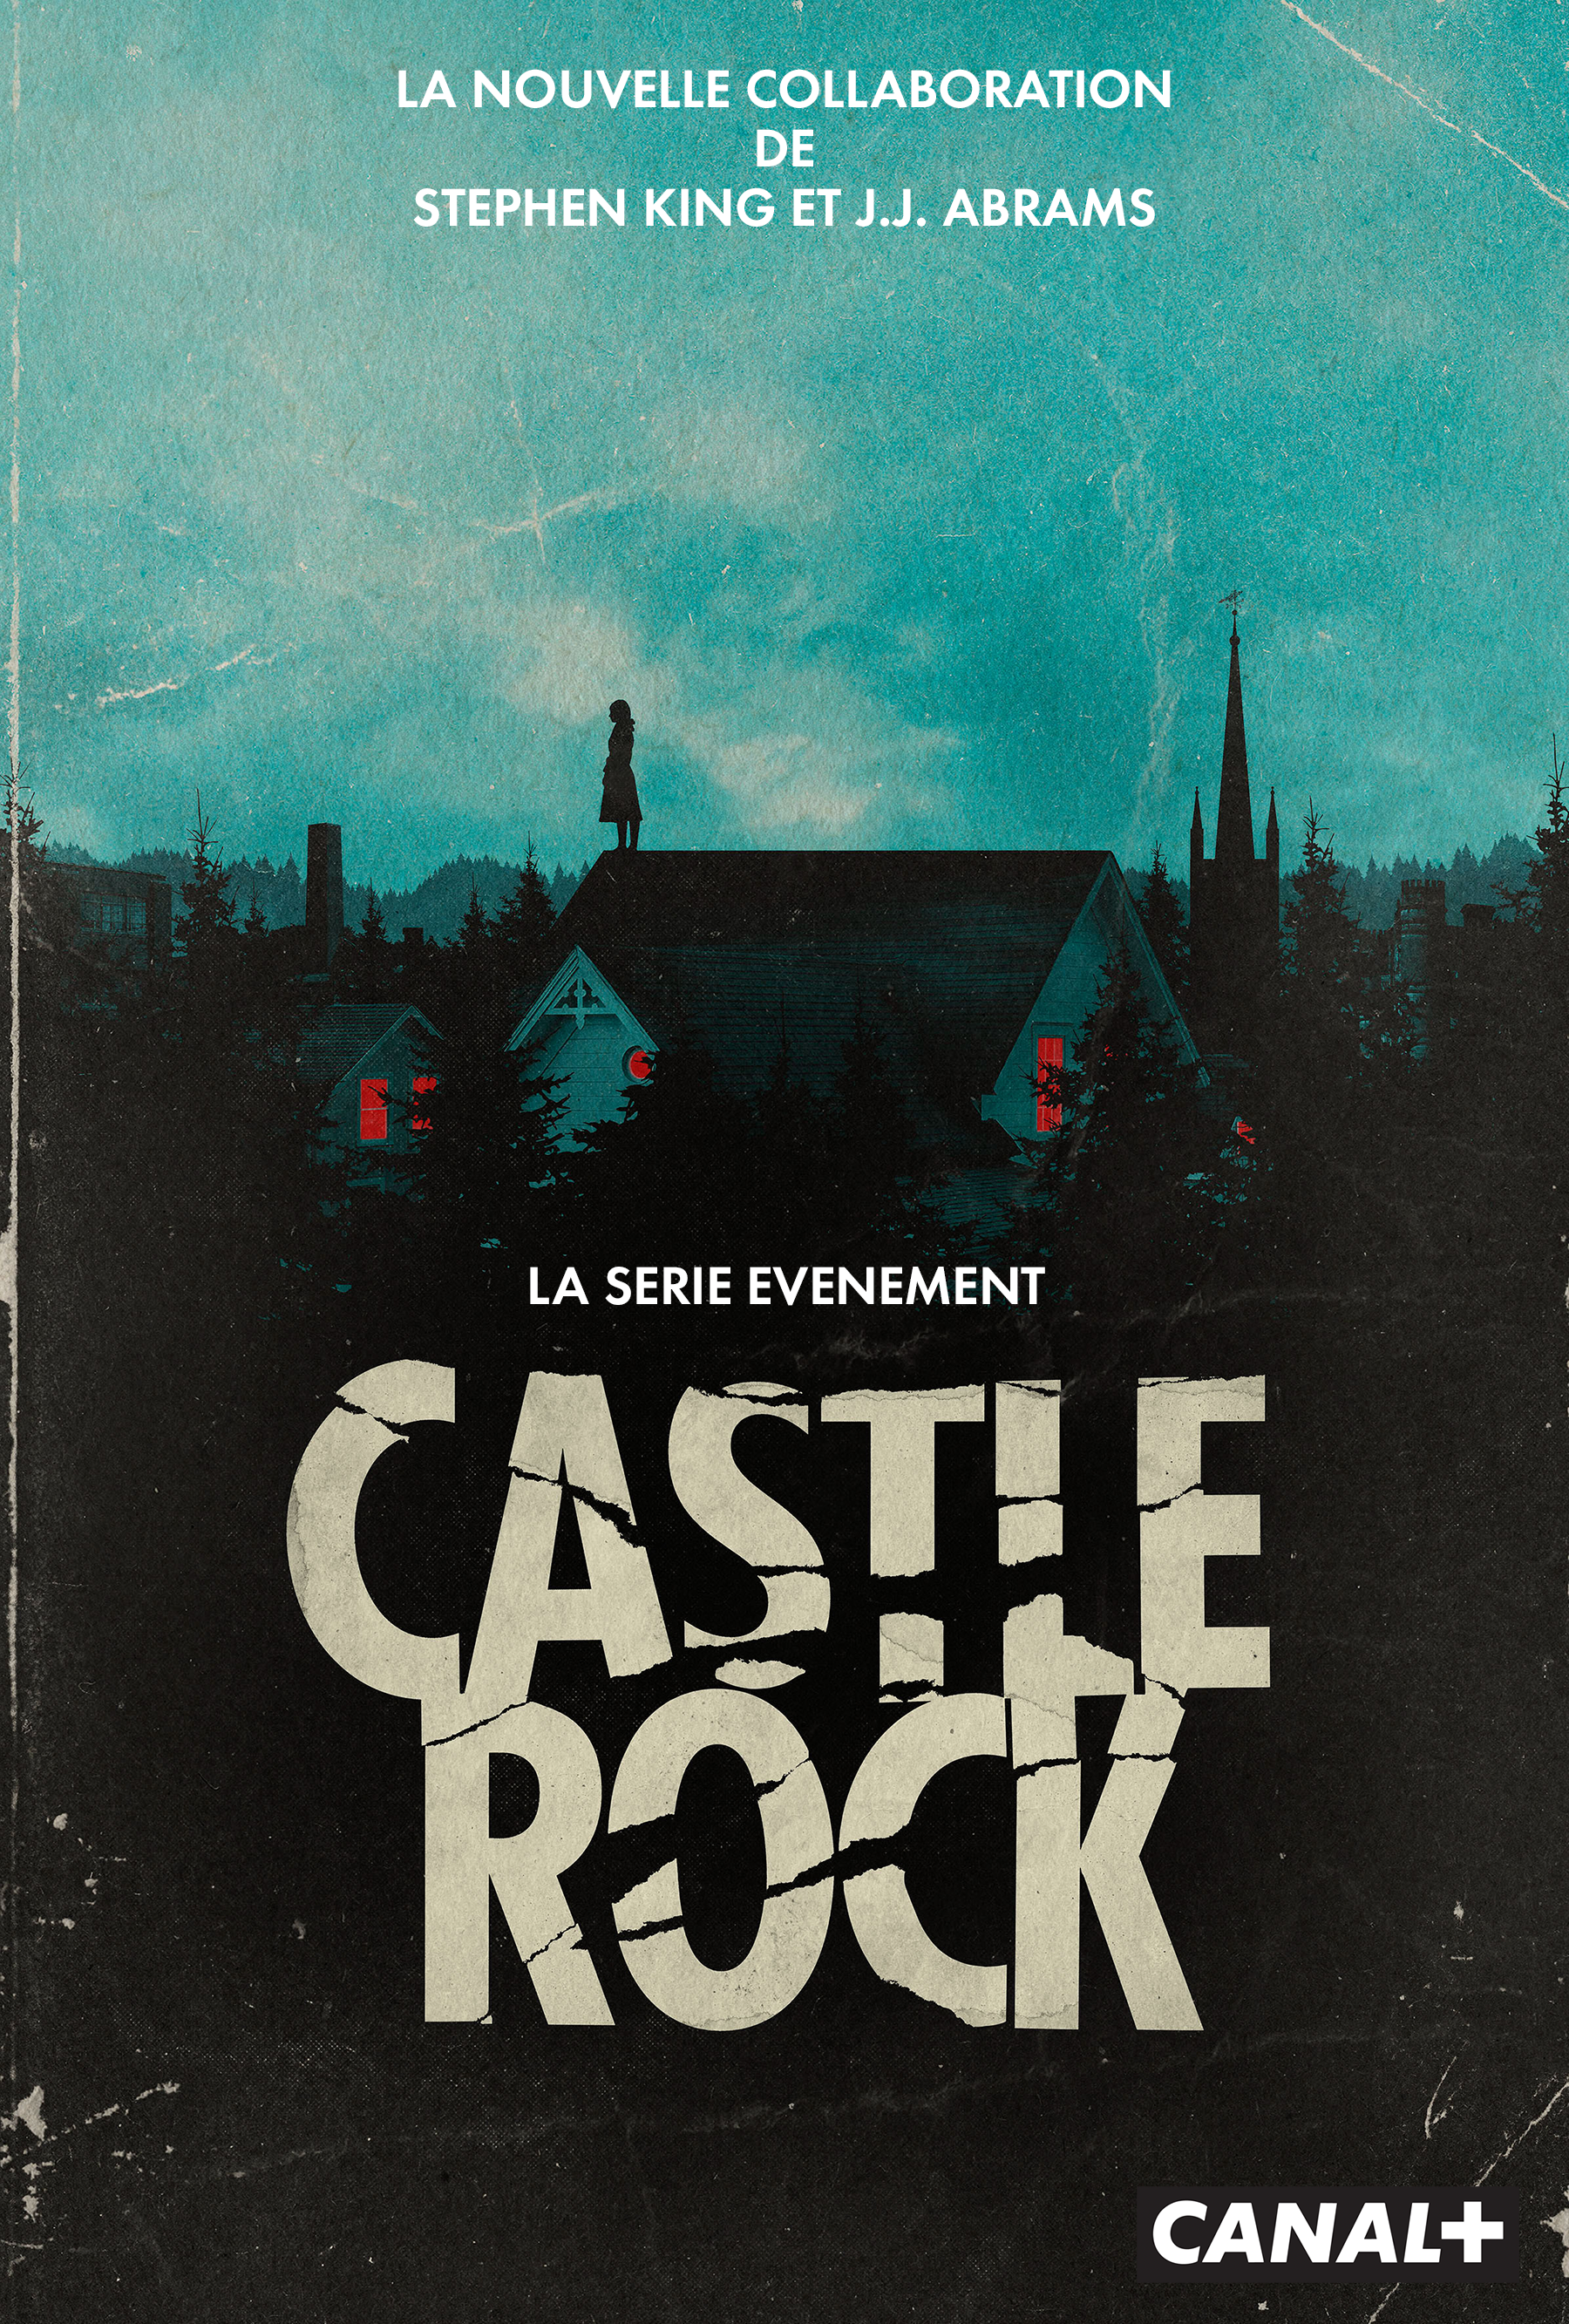 castle rock canal+